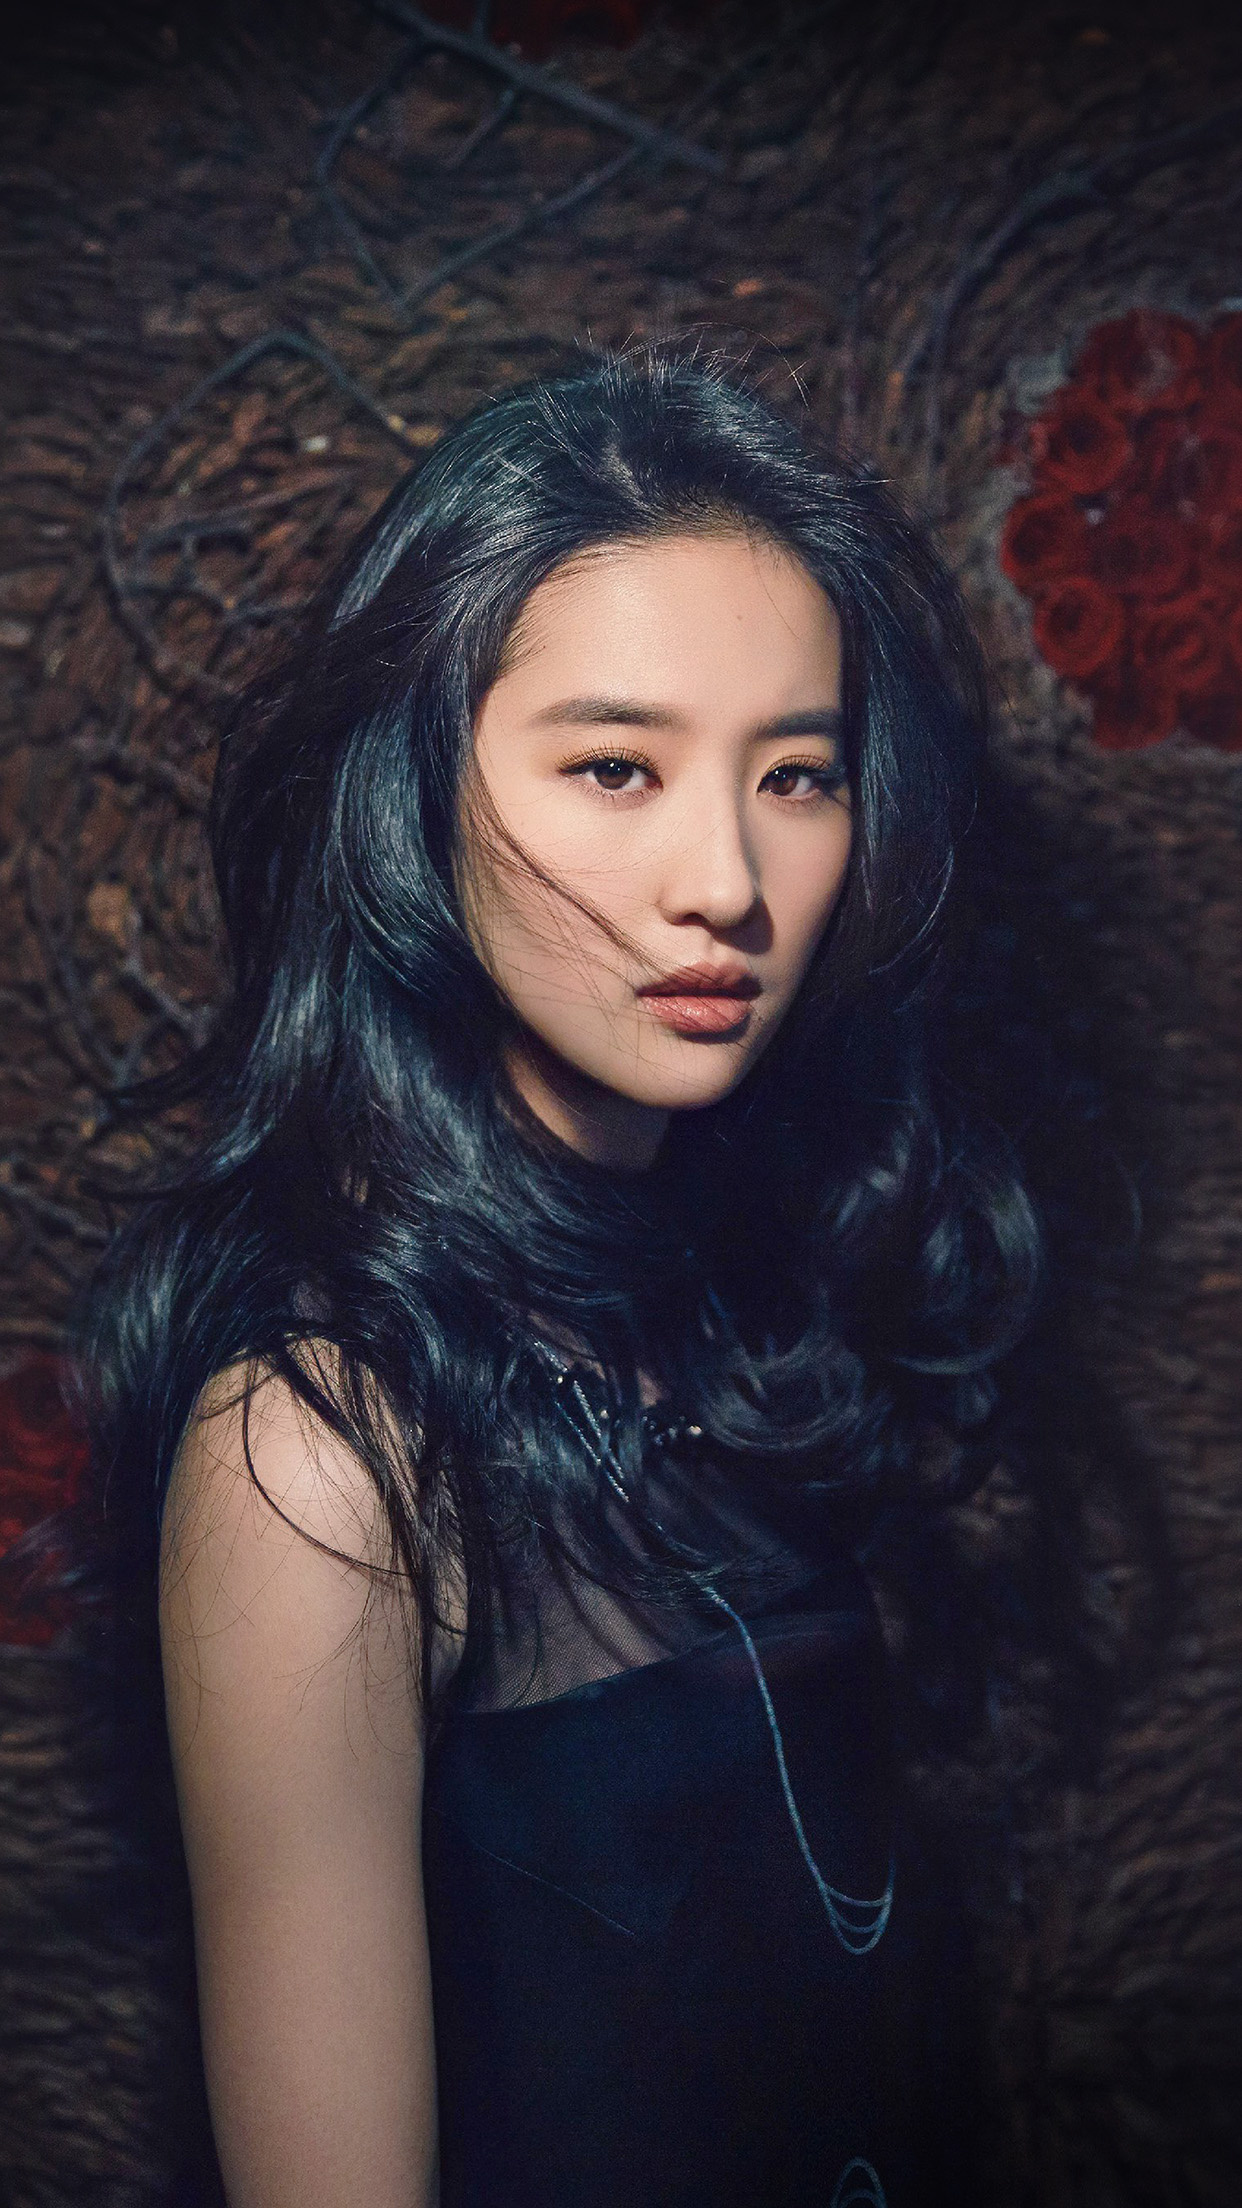 Girl Liu Yifei China Film Actress Model Singer Dark Android wallpaper